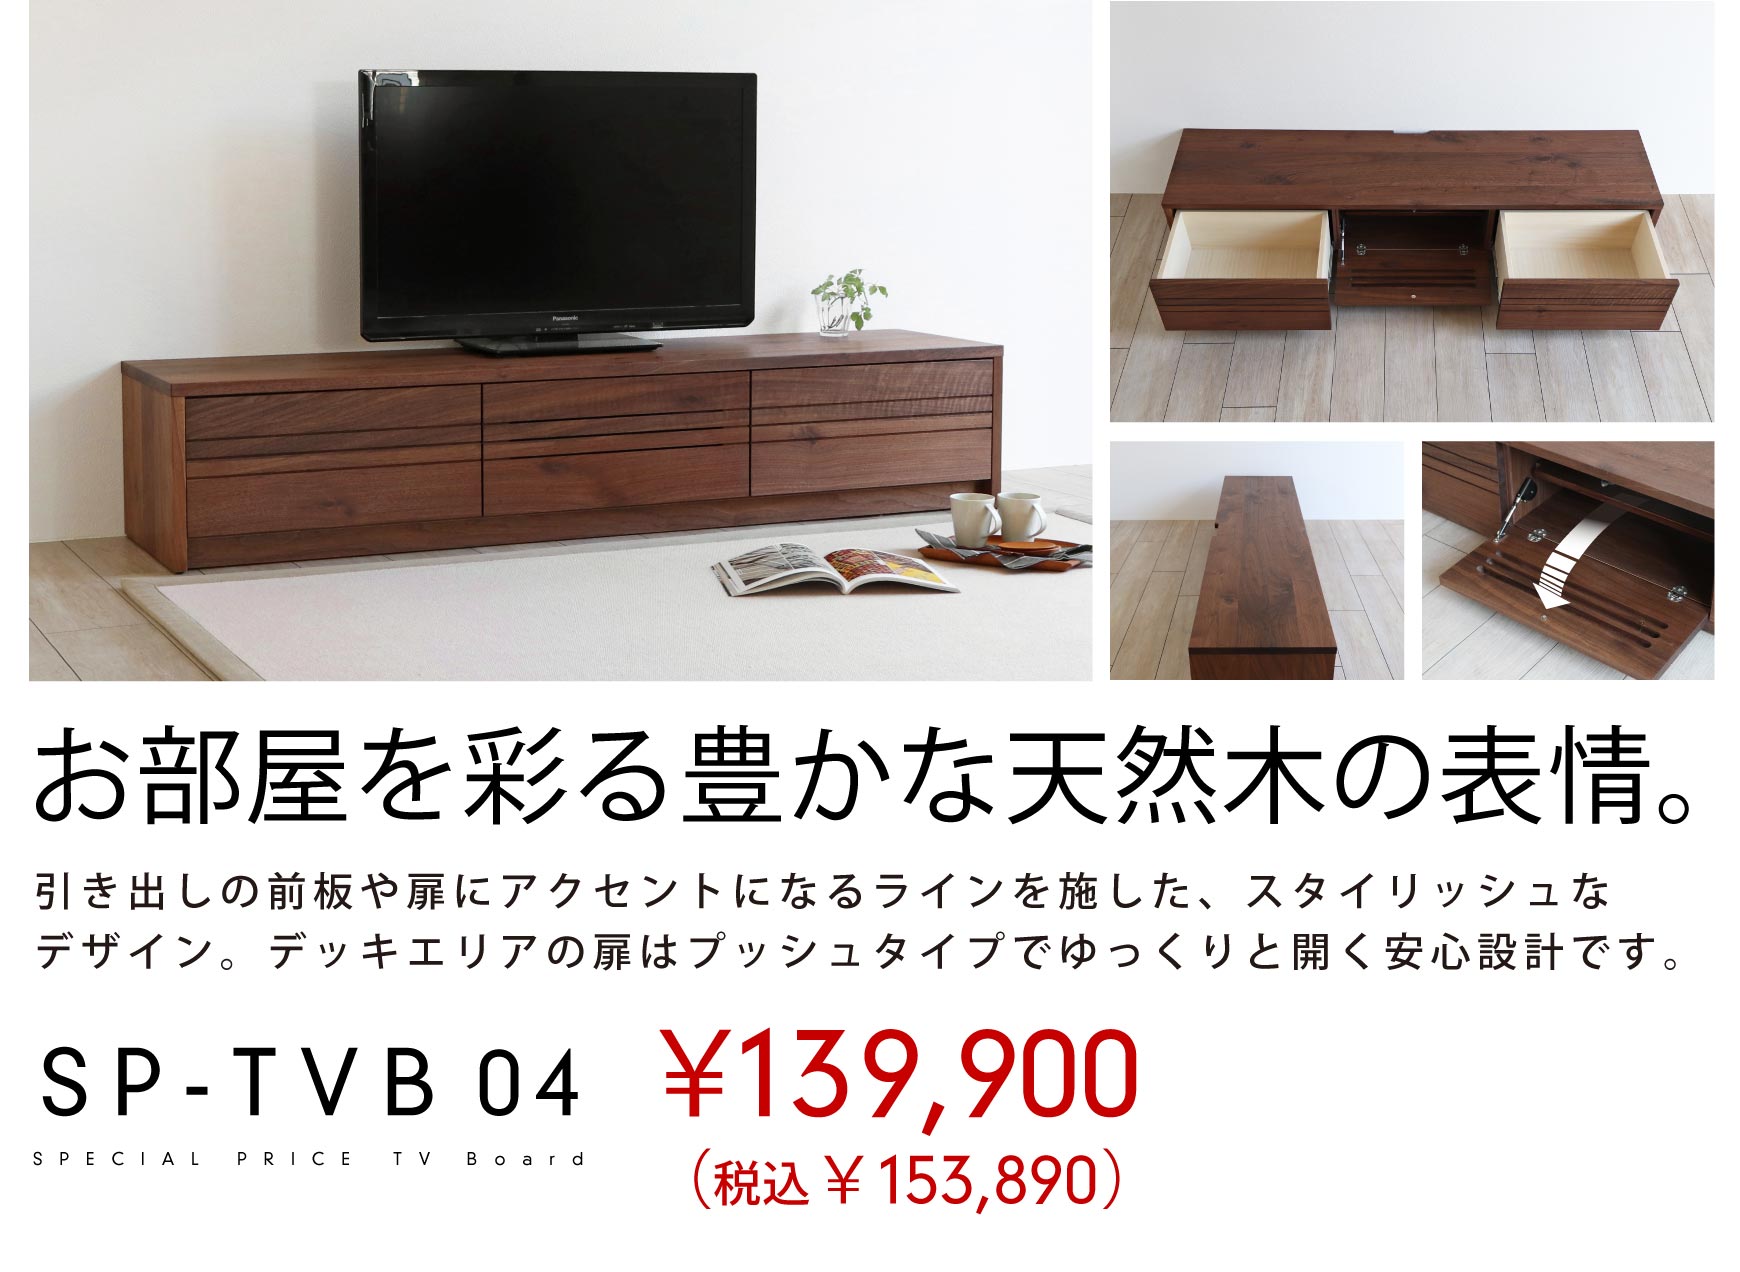 SP-TVB04 表情豊かな無垢の風合い、お買い求めやすいテレビボード